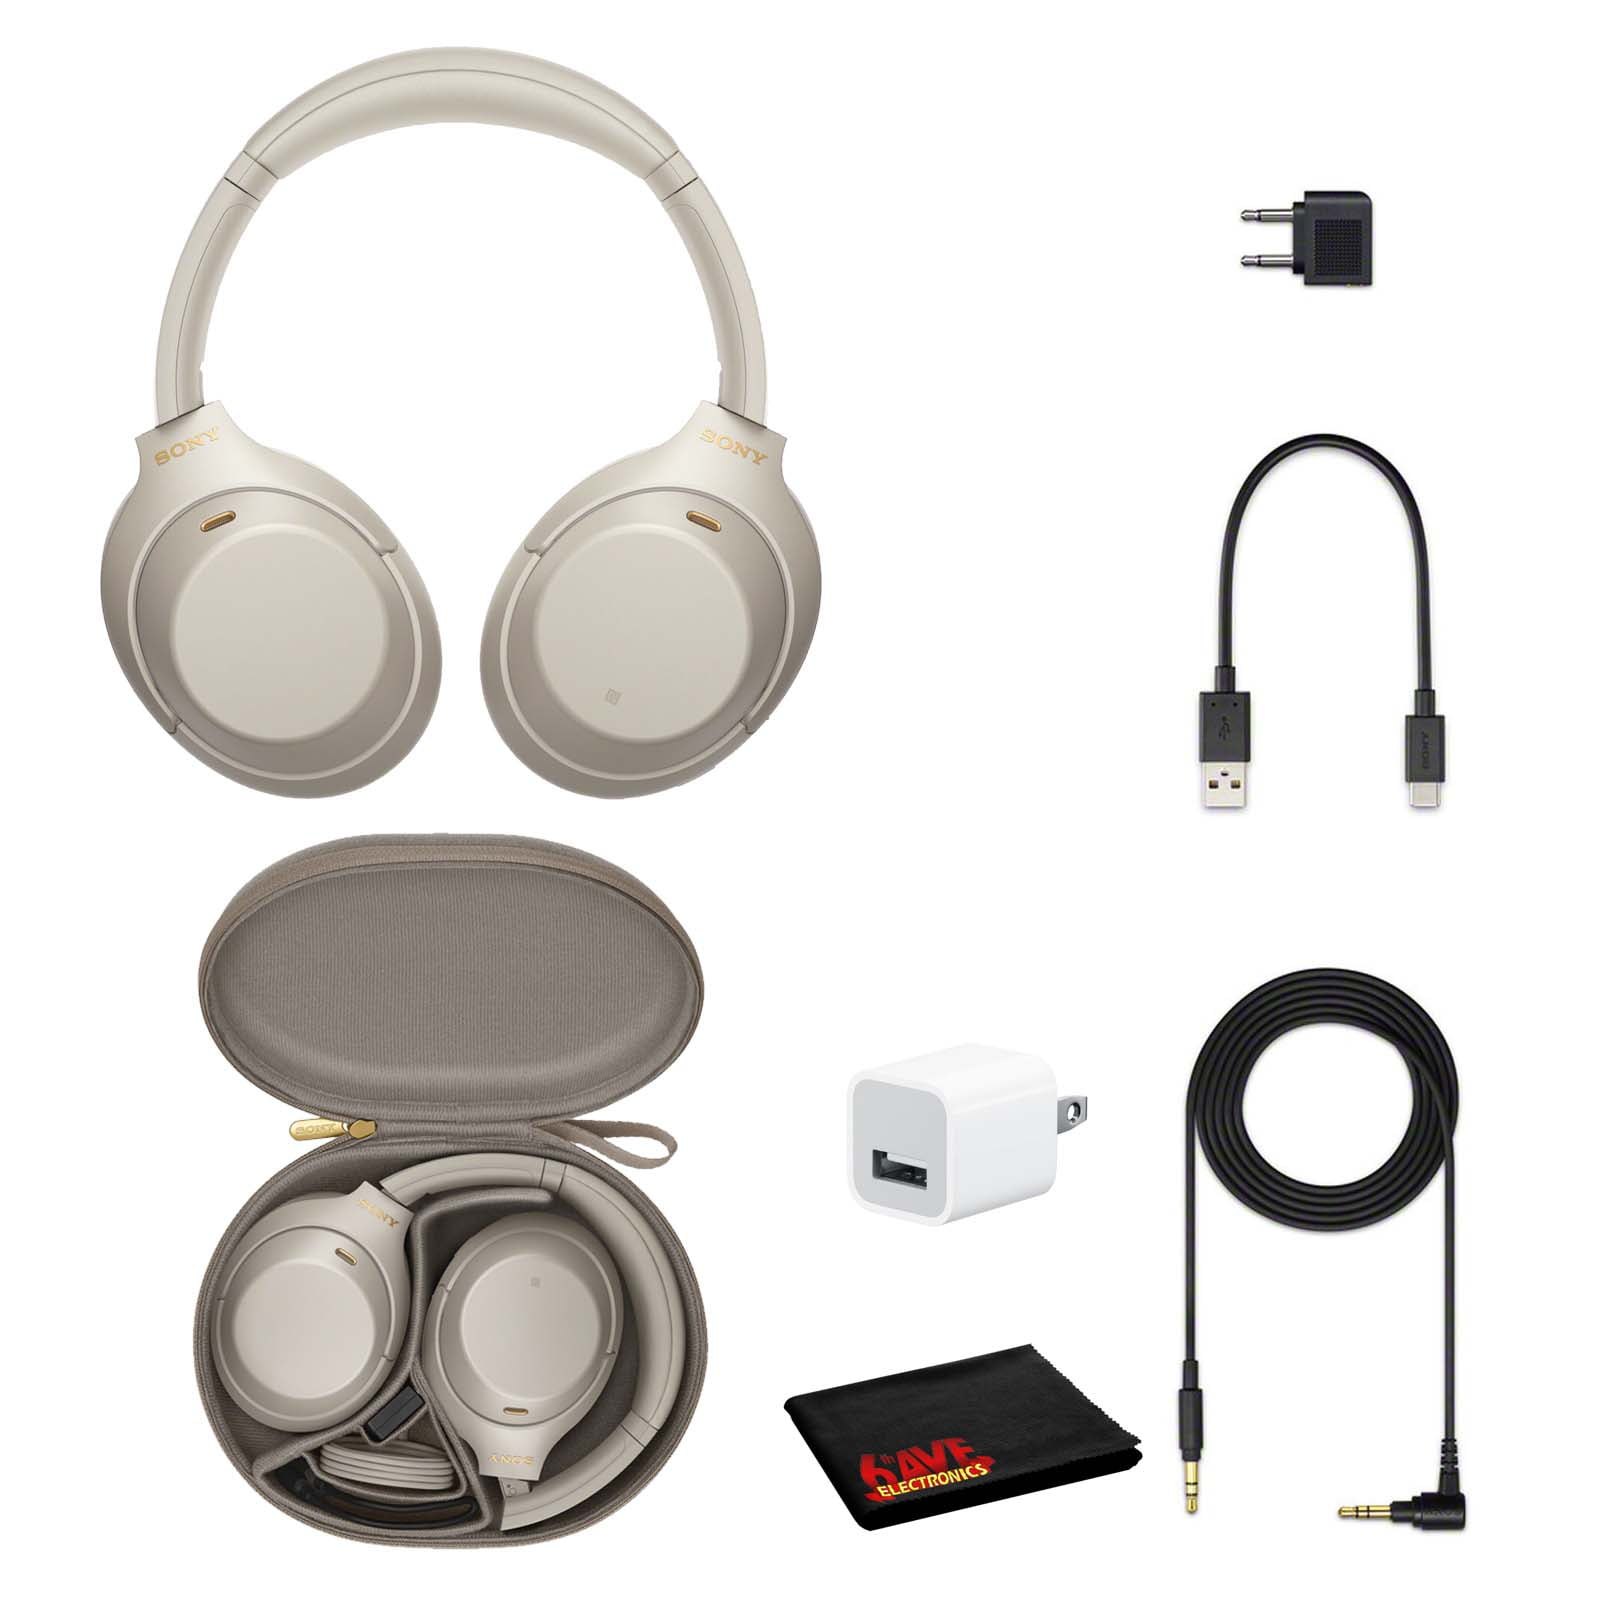 Sony WH-1000XM4 Wireless Noise Canceling Overhead Headphones (Silver